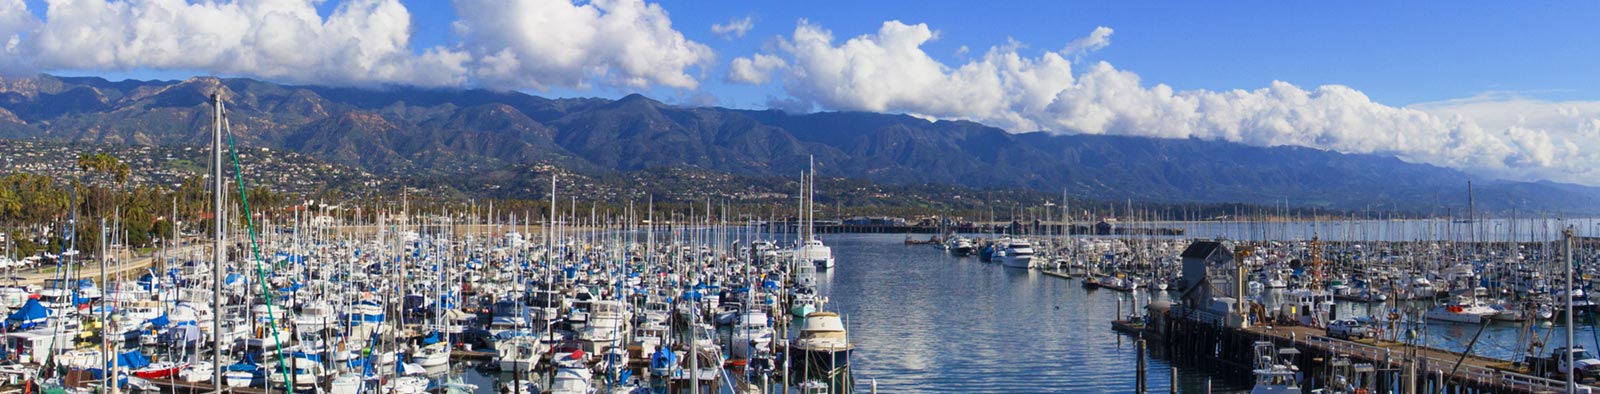 Santa Barbara Harbor Views